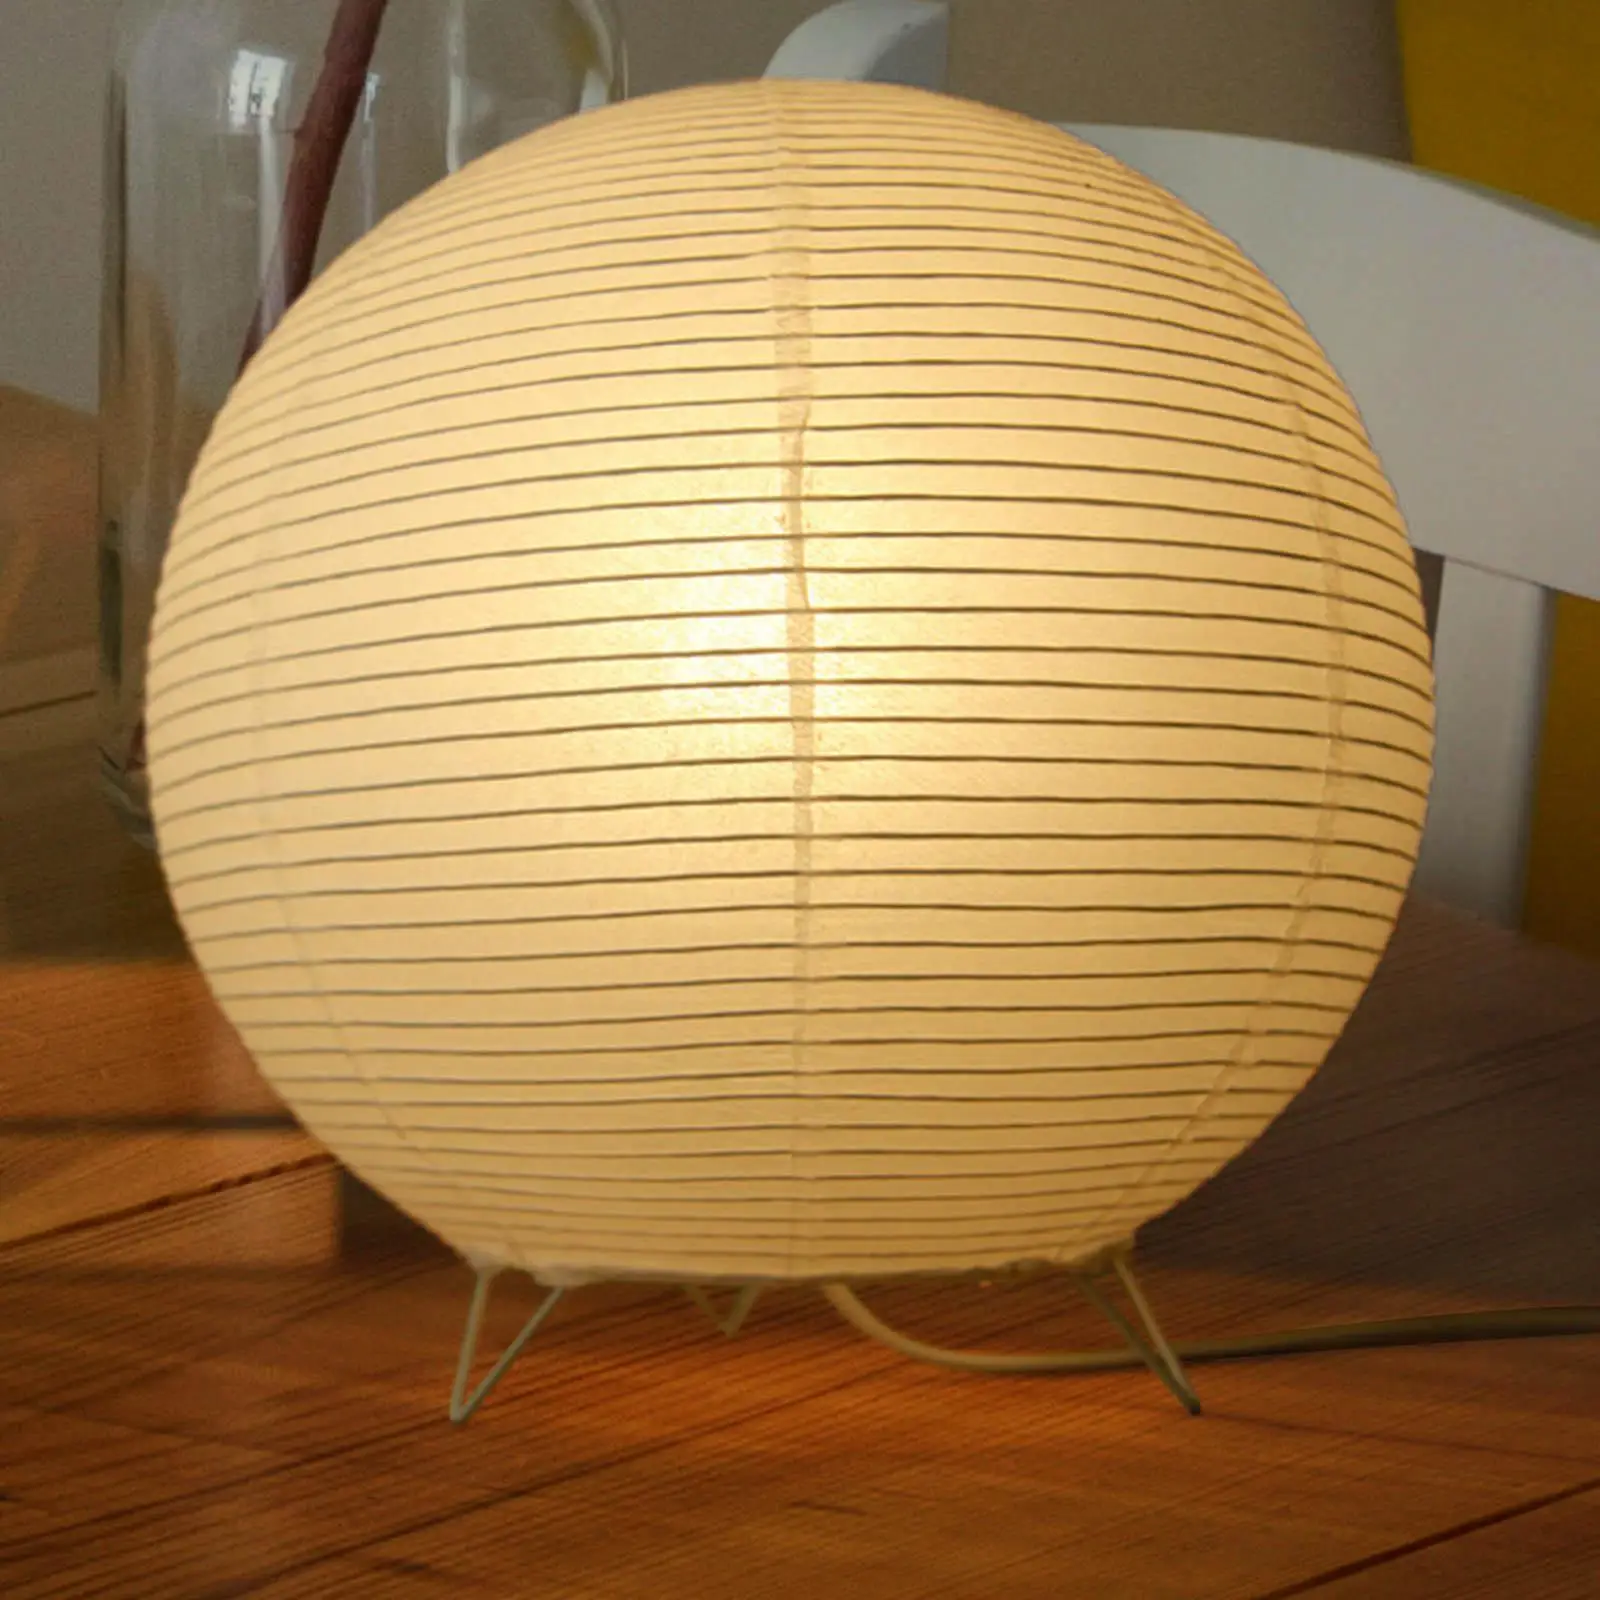 Paper Lantern Table Lamp Creative Paper Lamp Lantern Lamp Desk Light Standing Lamp for Bedside Dresser Office Home Decor